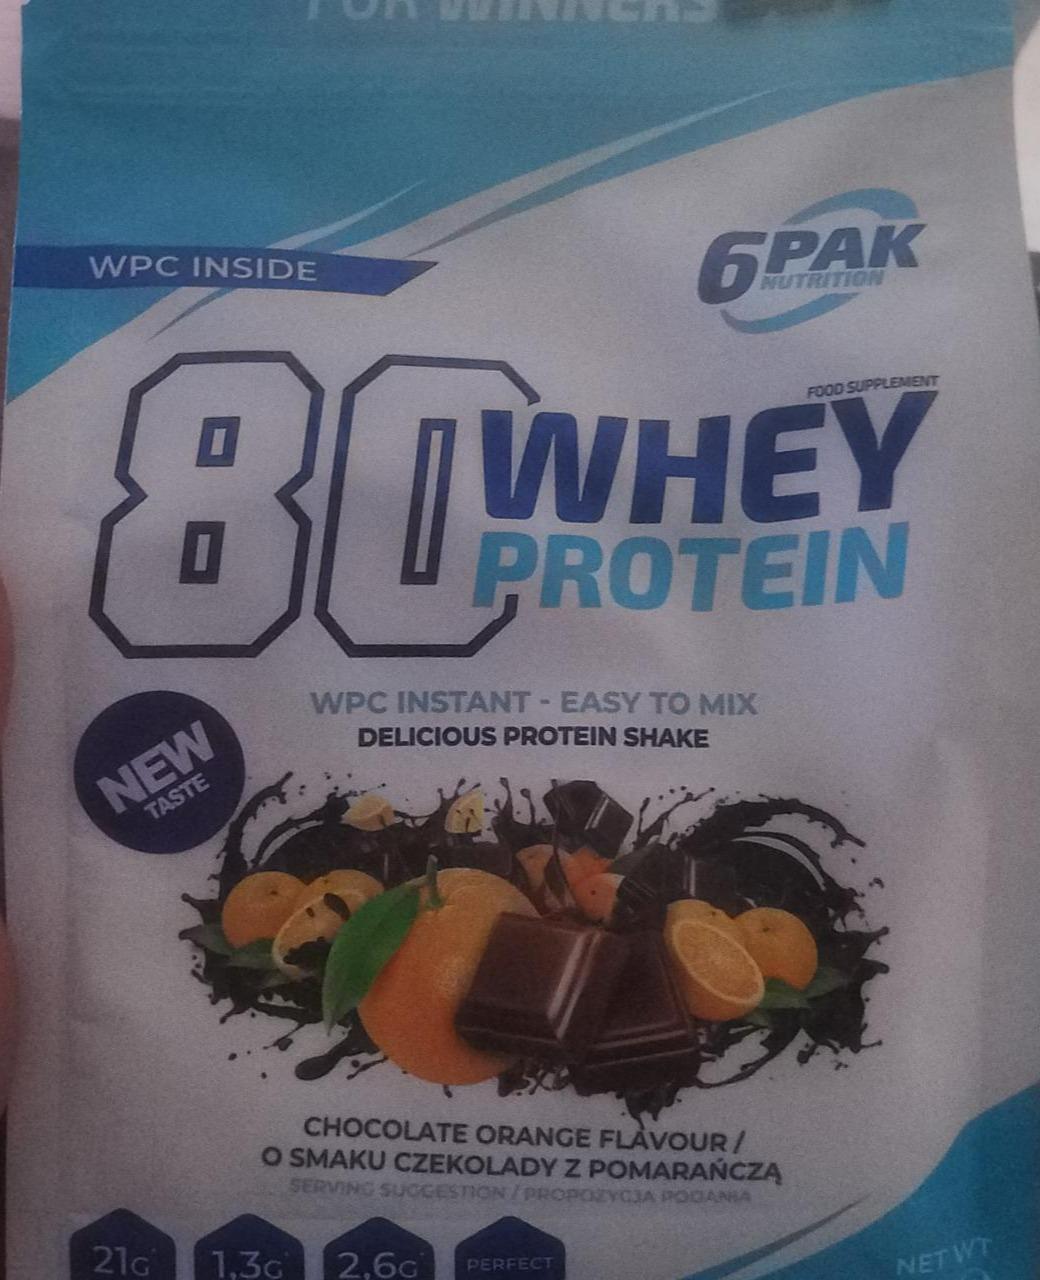 Fotografie - 80 Whey protein Chocolate Orange Flavour 6PAK Nutrition